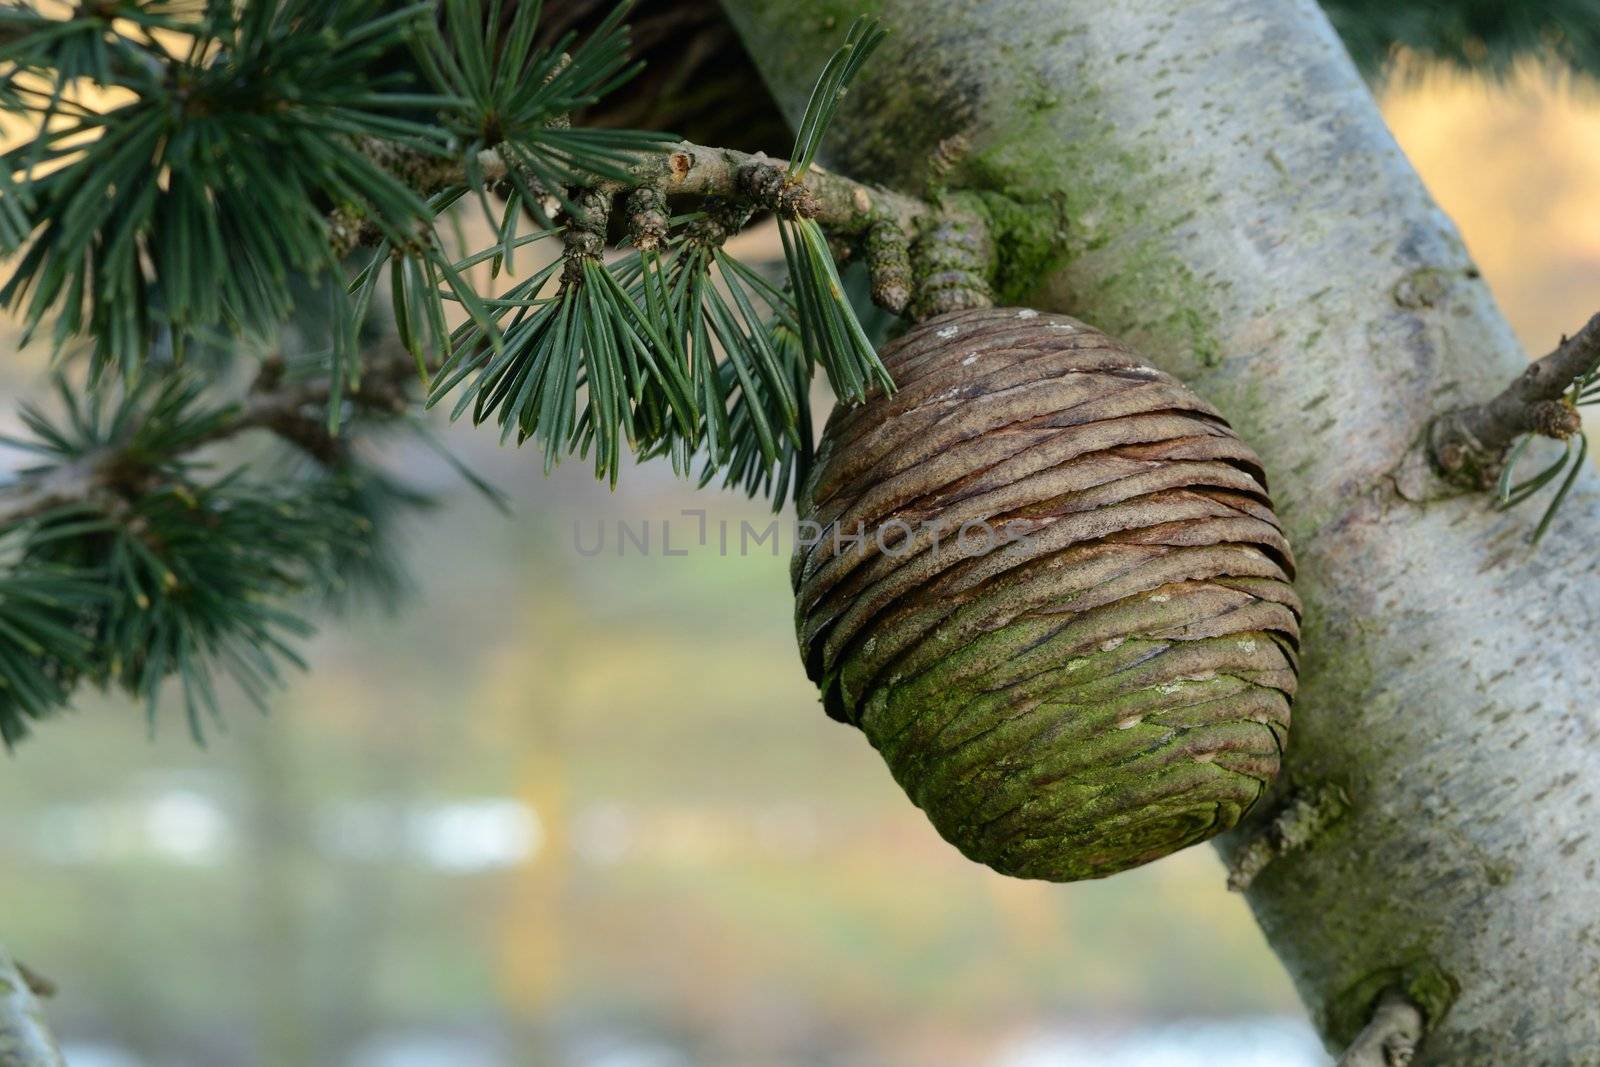 close up of pine tree in winter season